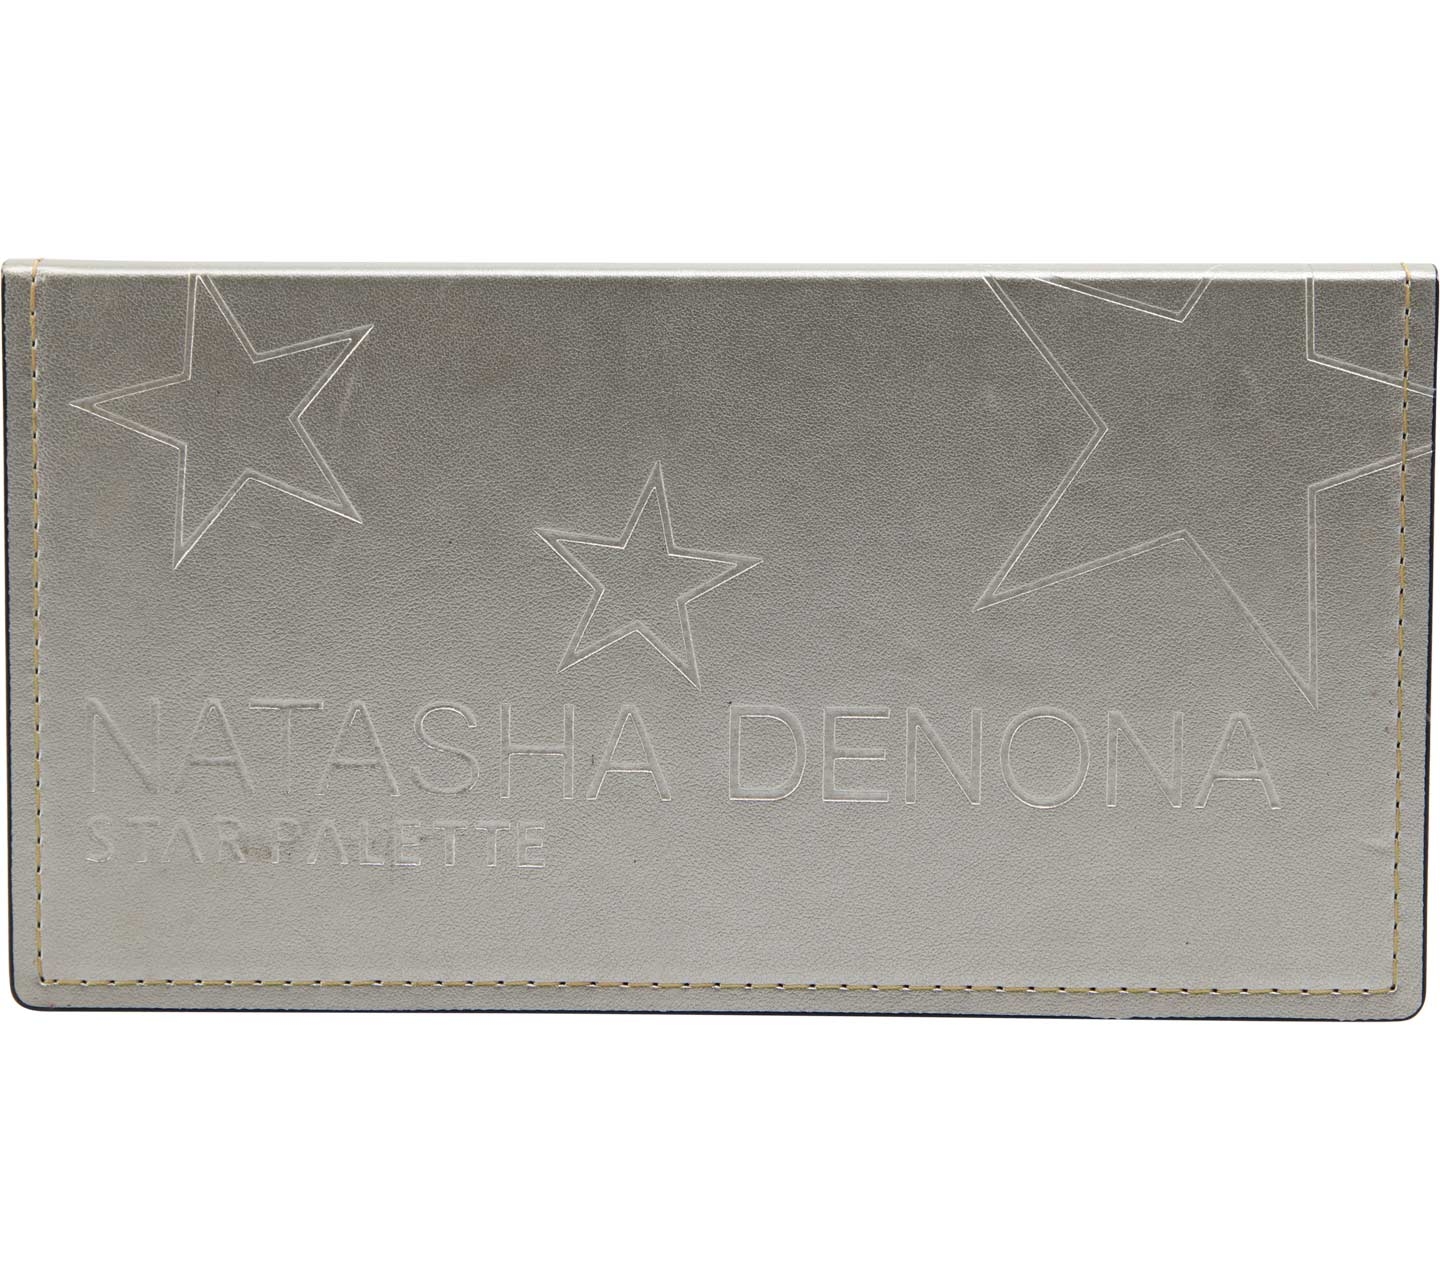 Natasha Denona Eyeshadow Star Palette Sets and Palette